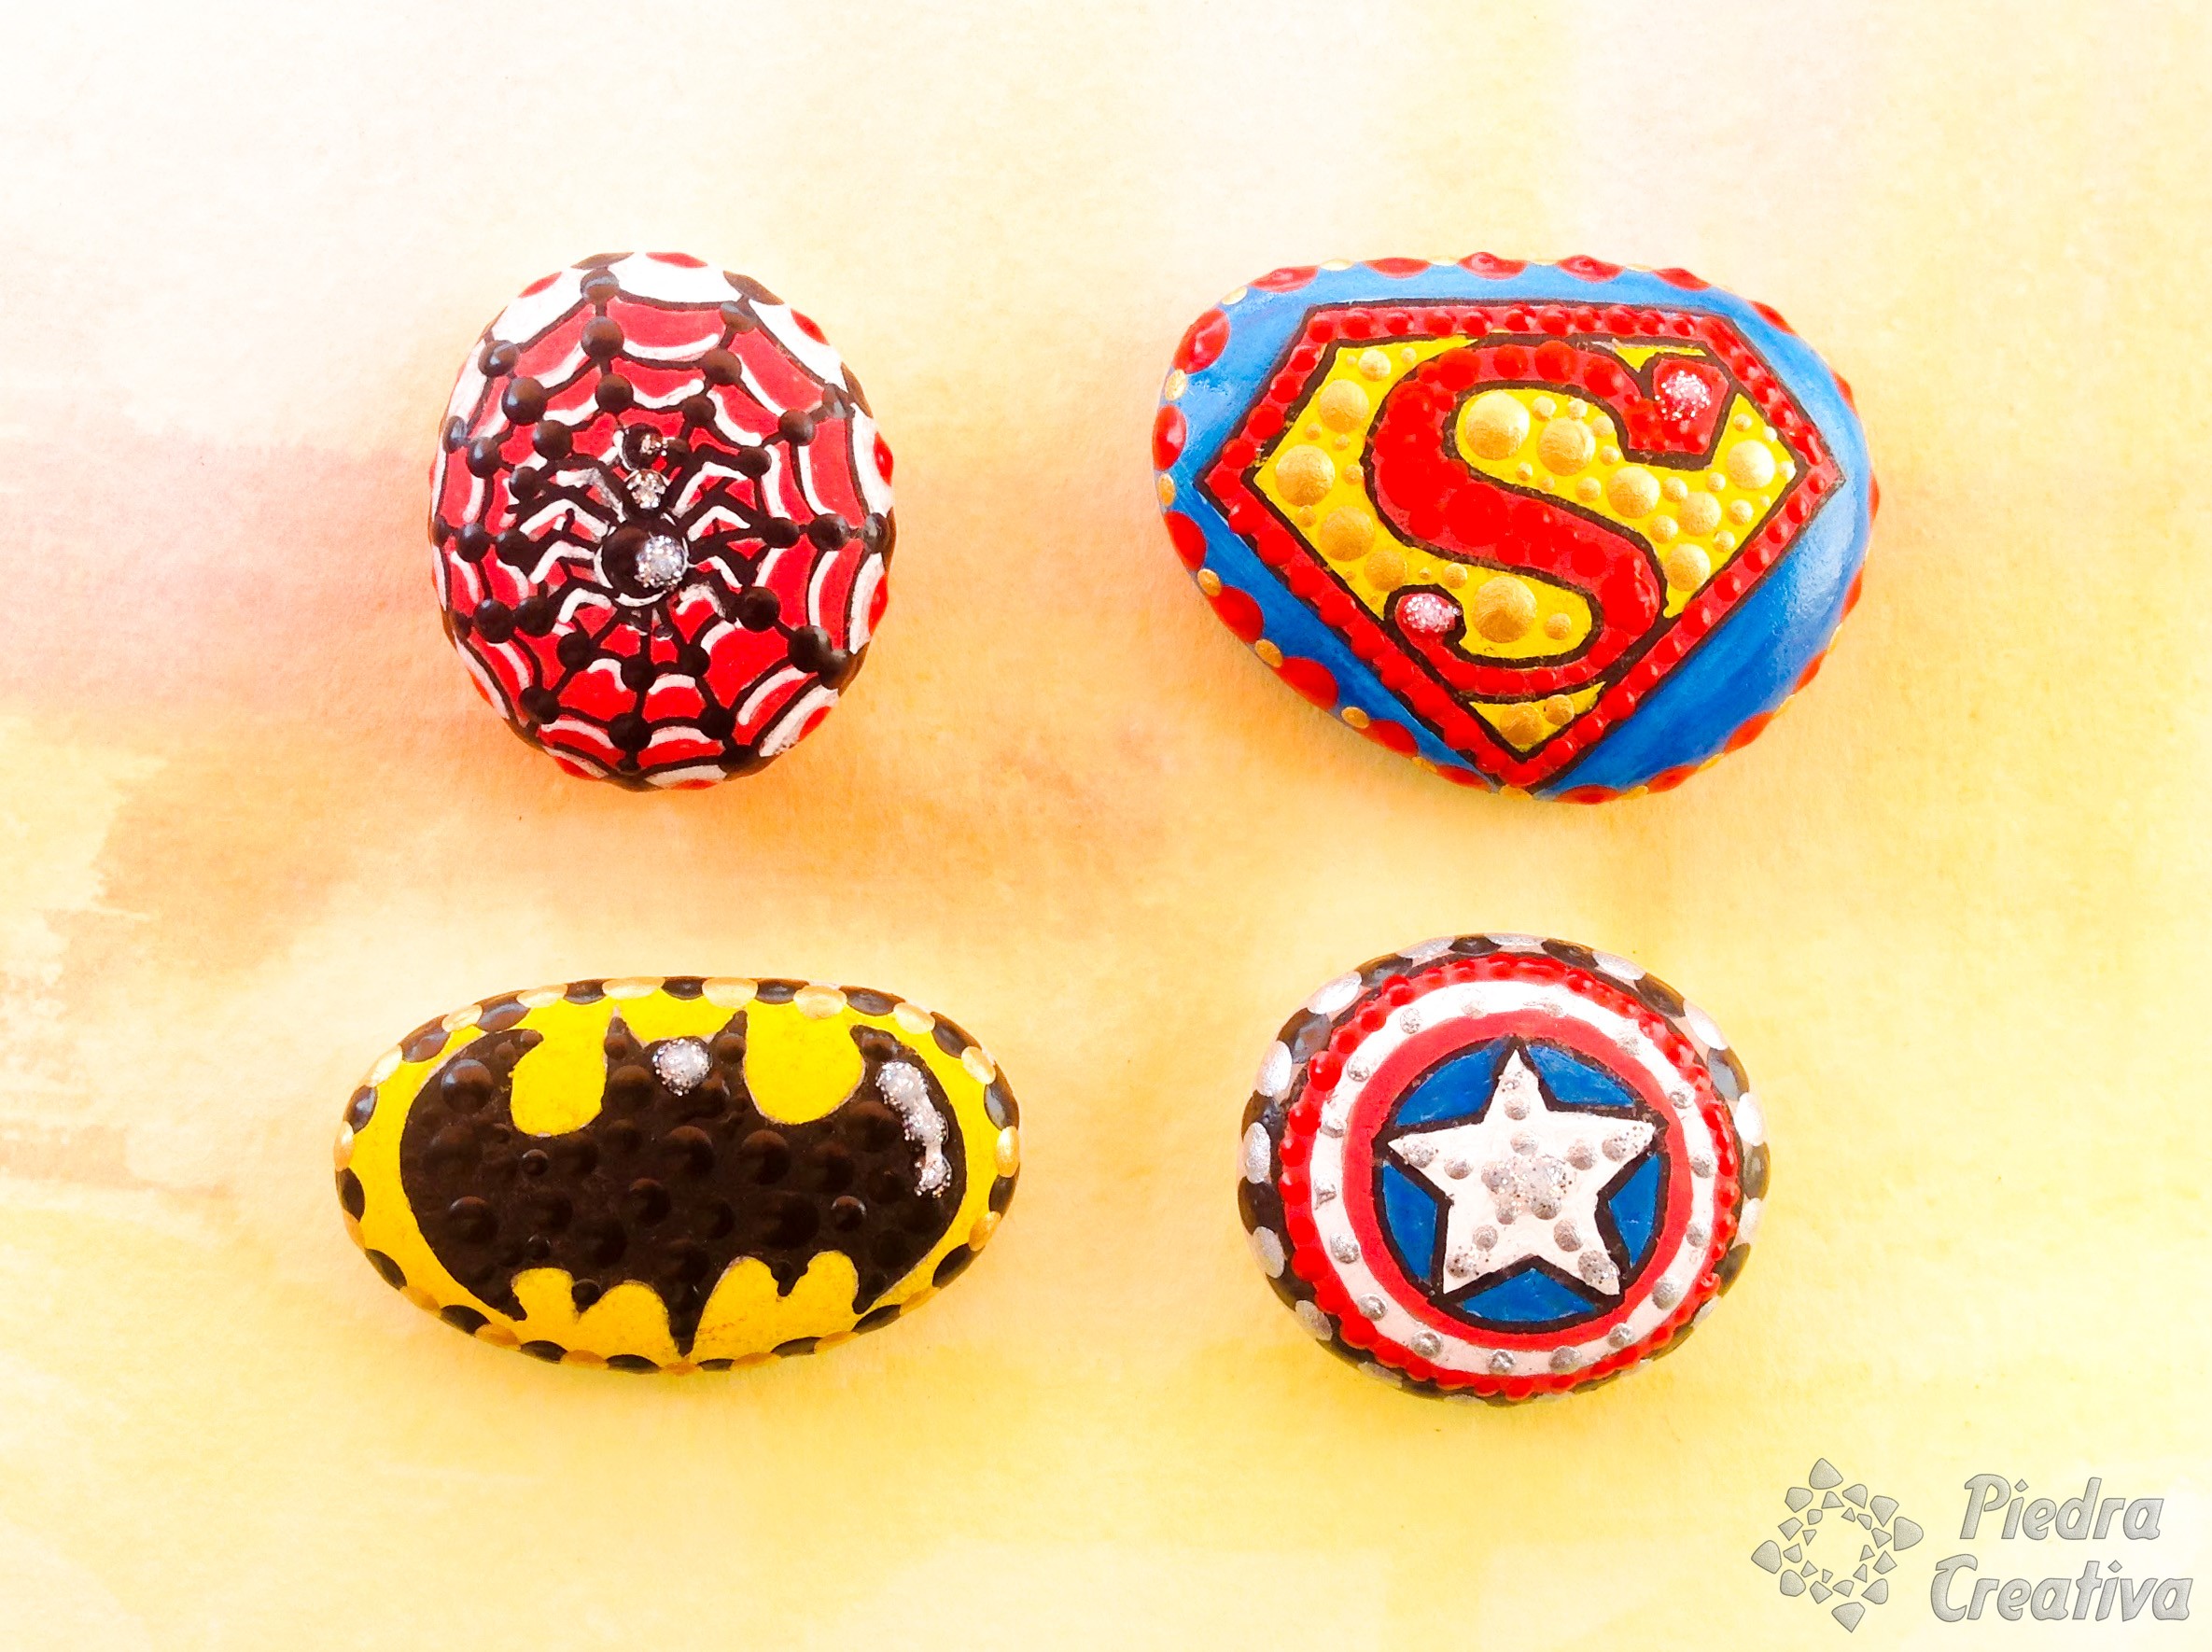 Logos de superheroes en piedras pintadas